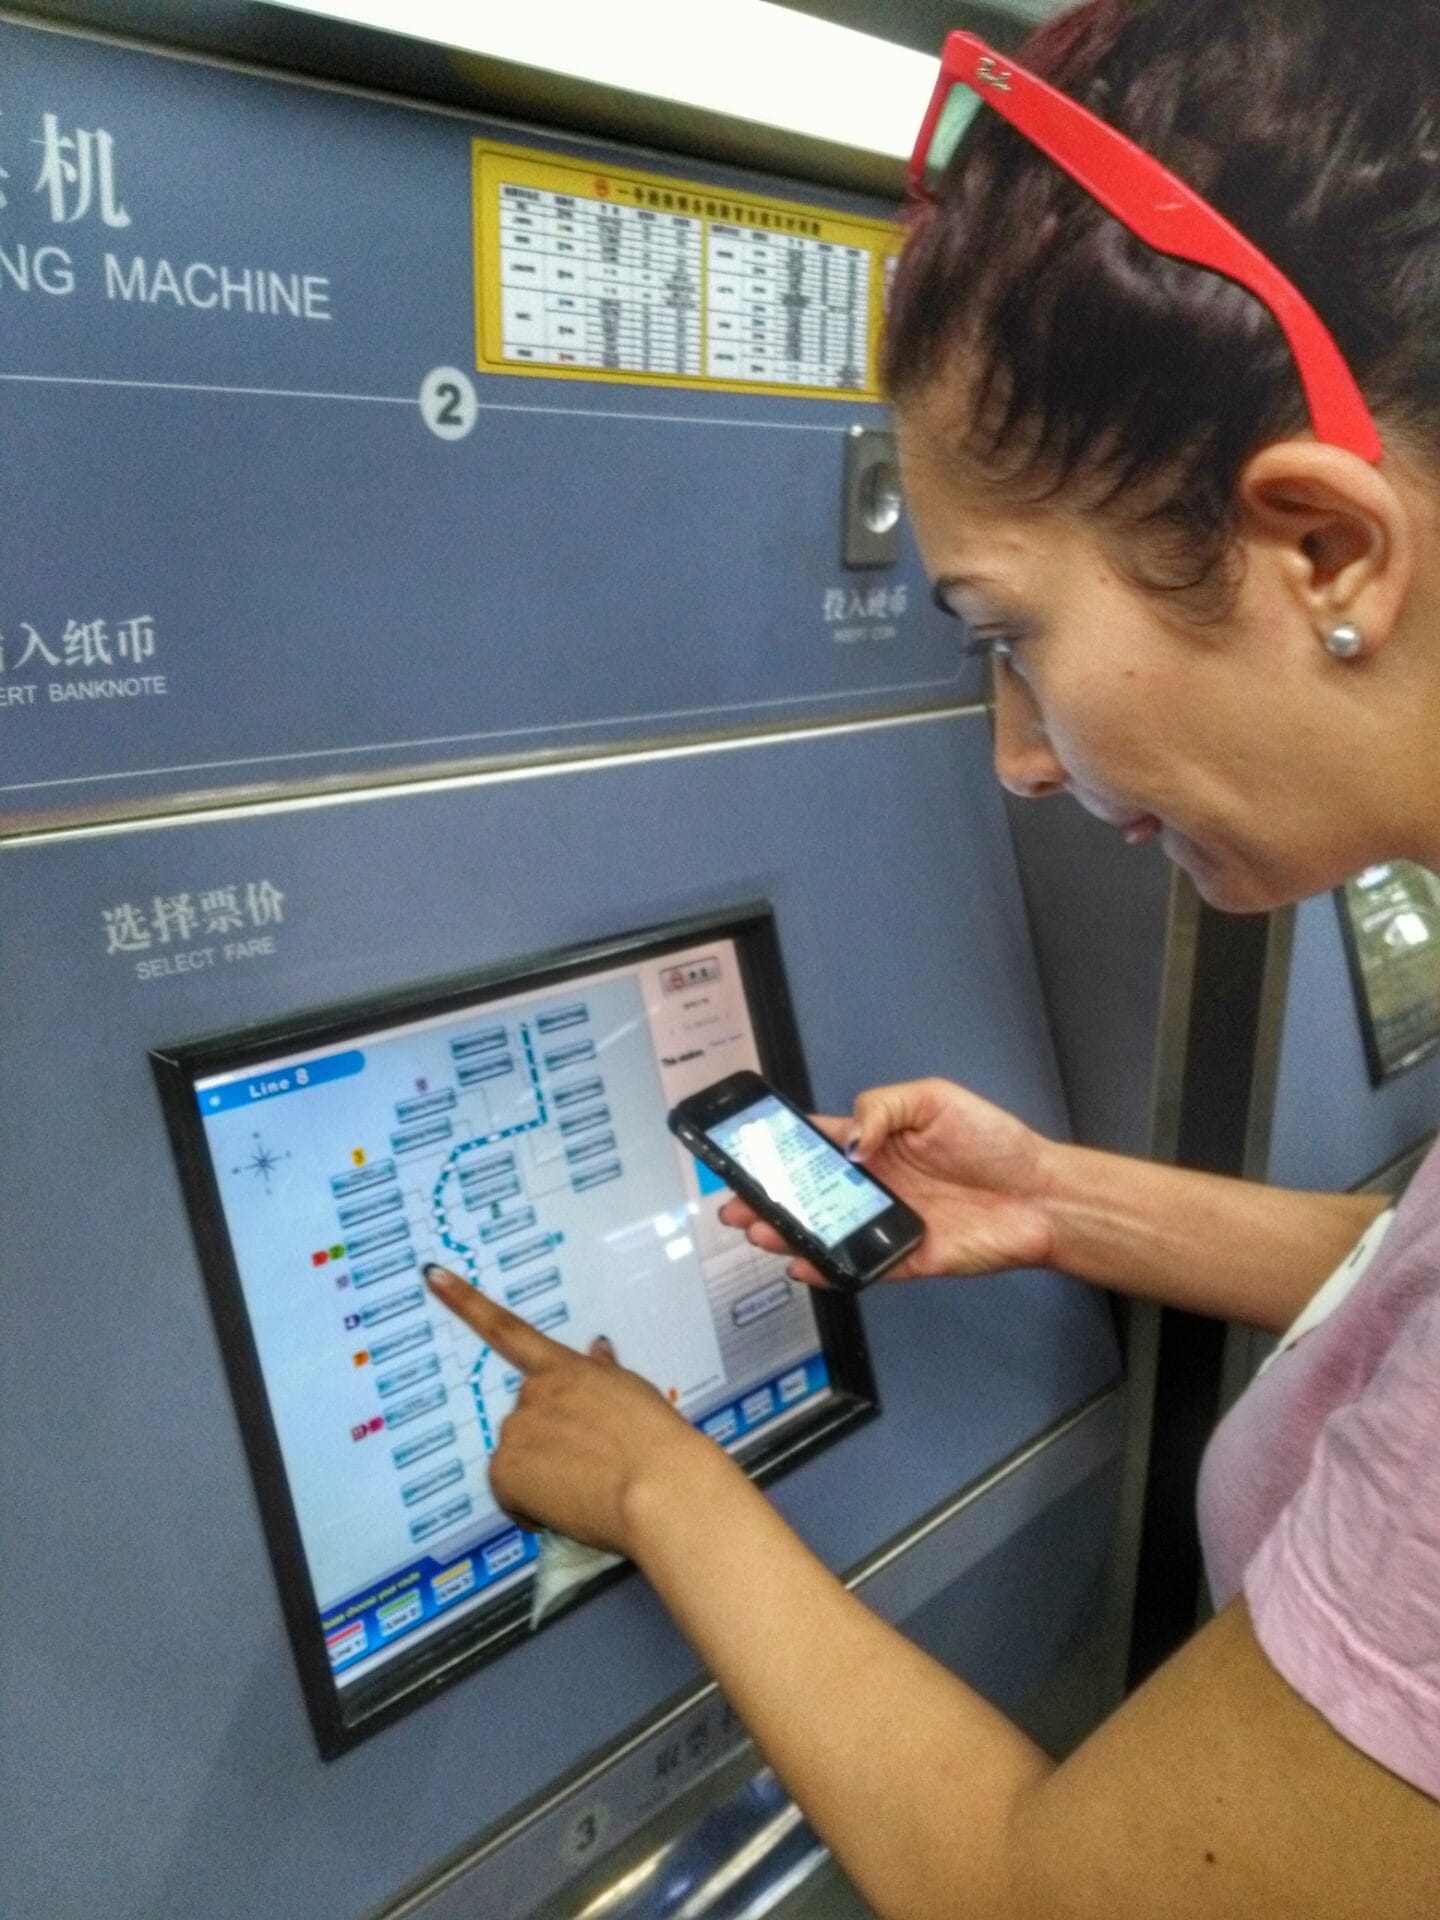 Touchscreen Ticket Machine - Shanghai Metro